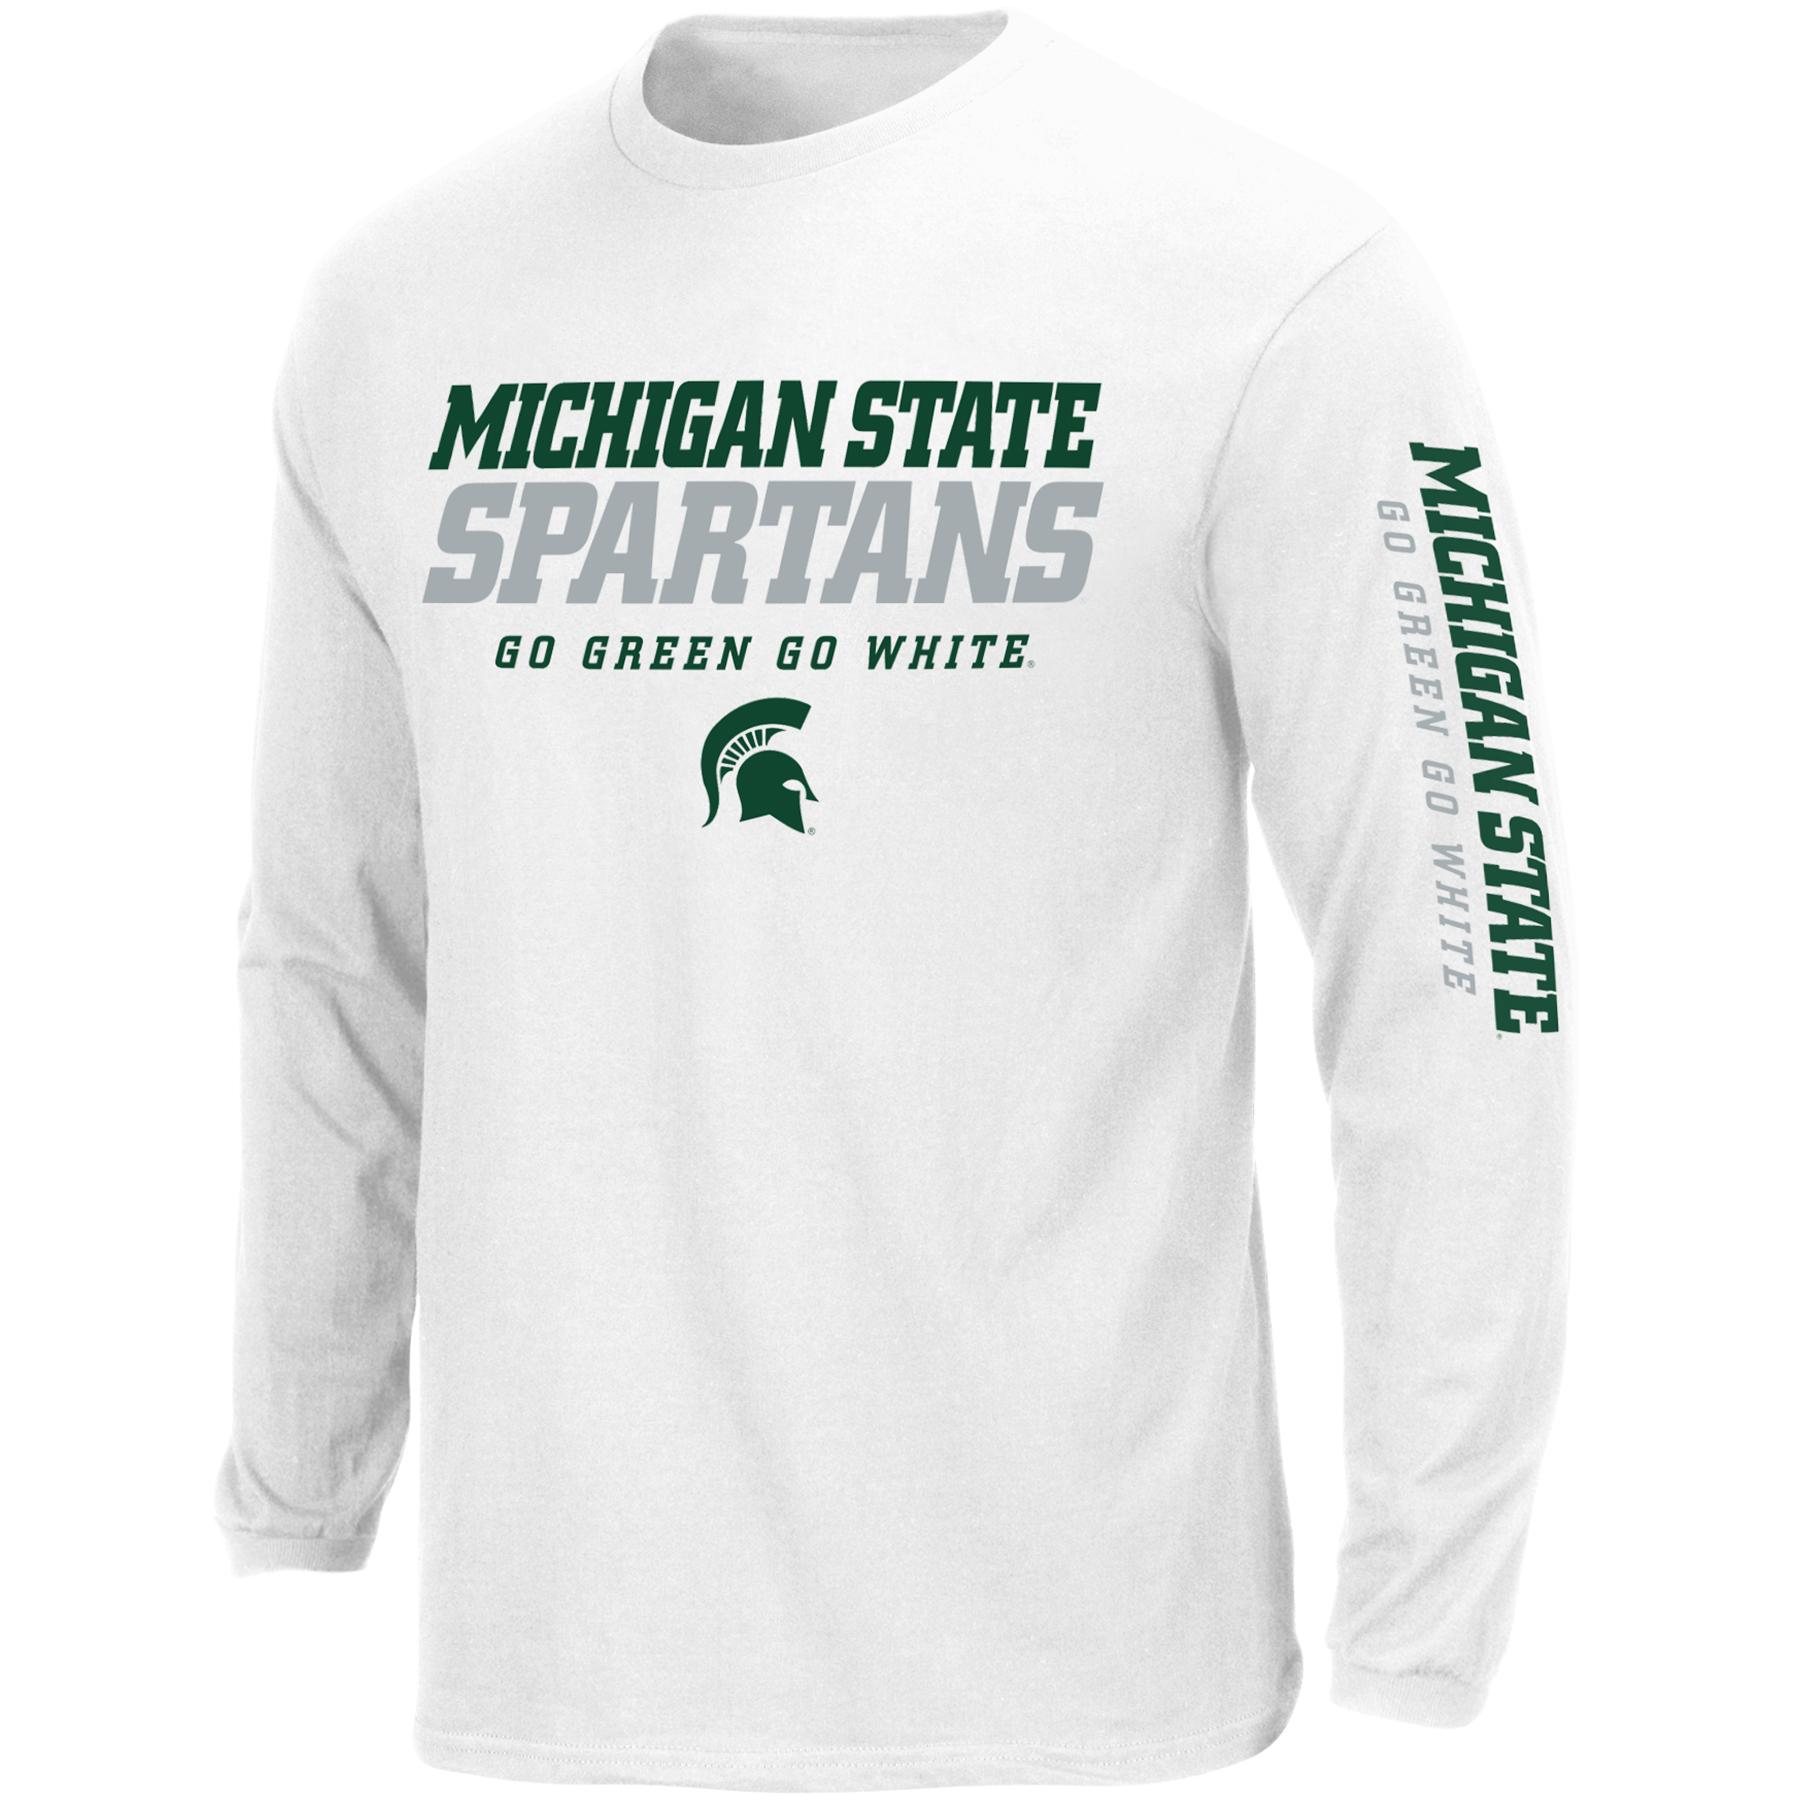 NCAA Men's Long-Sleeve T-Shirt - Michigan State Spartans